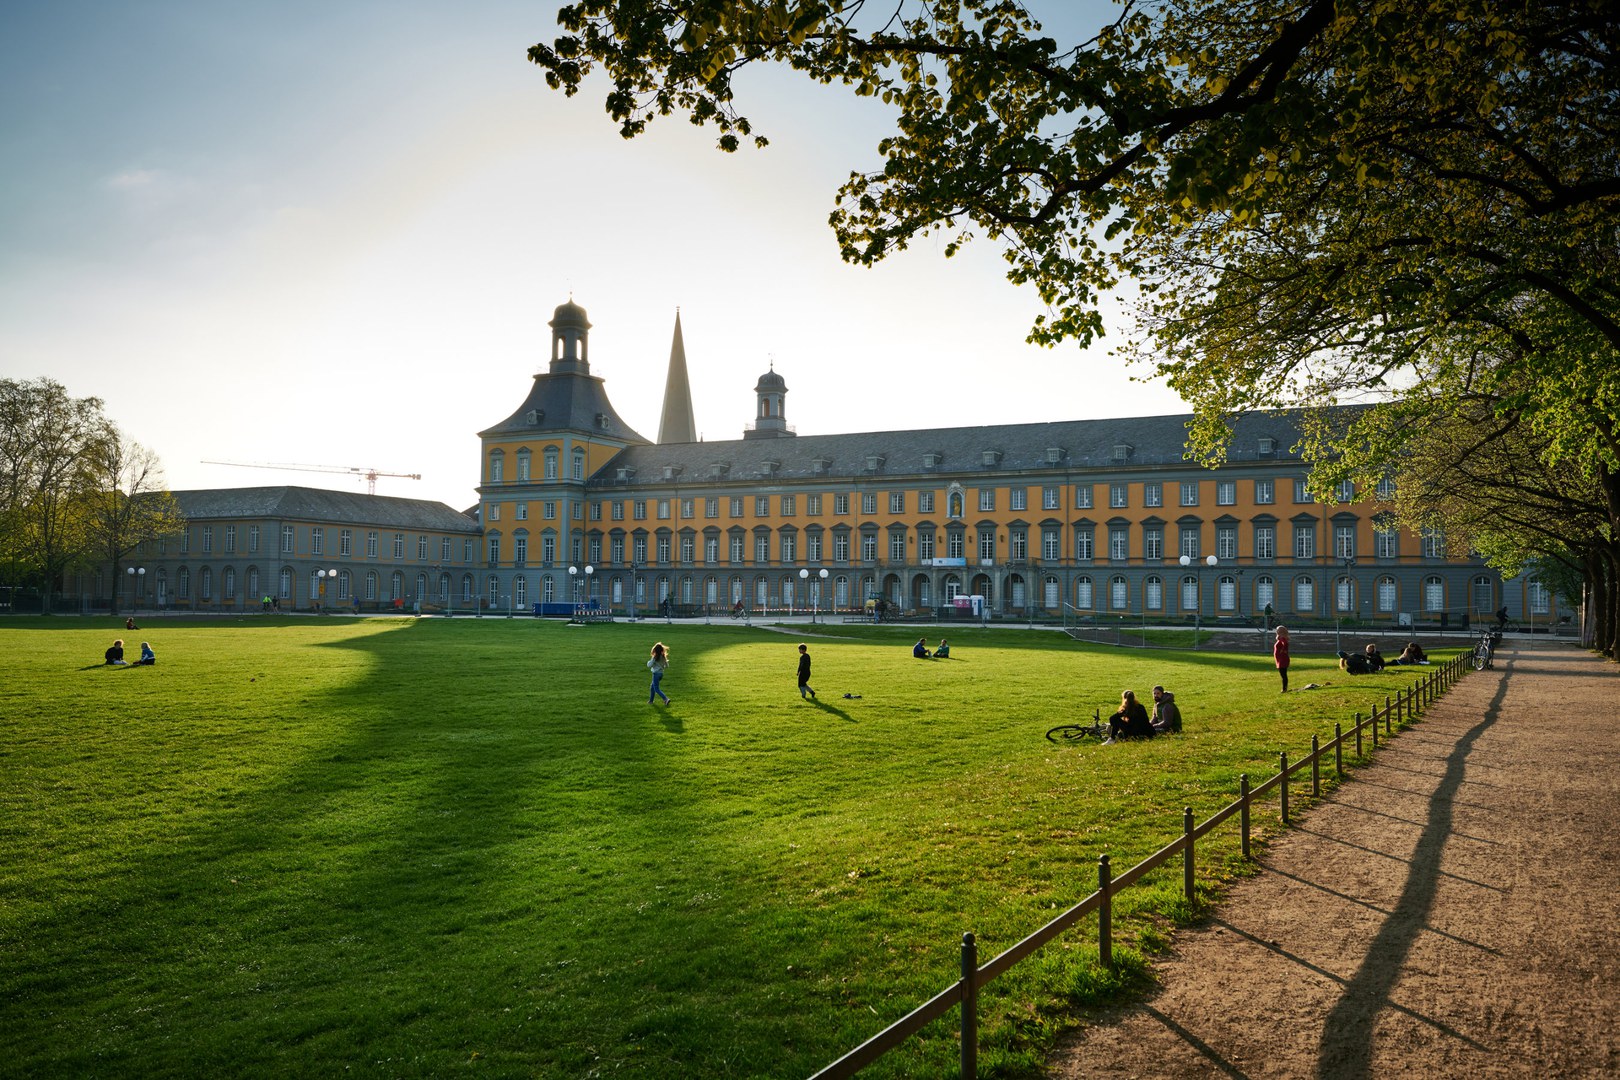 The University of Bonn (University Main Building shown here)